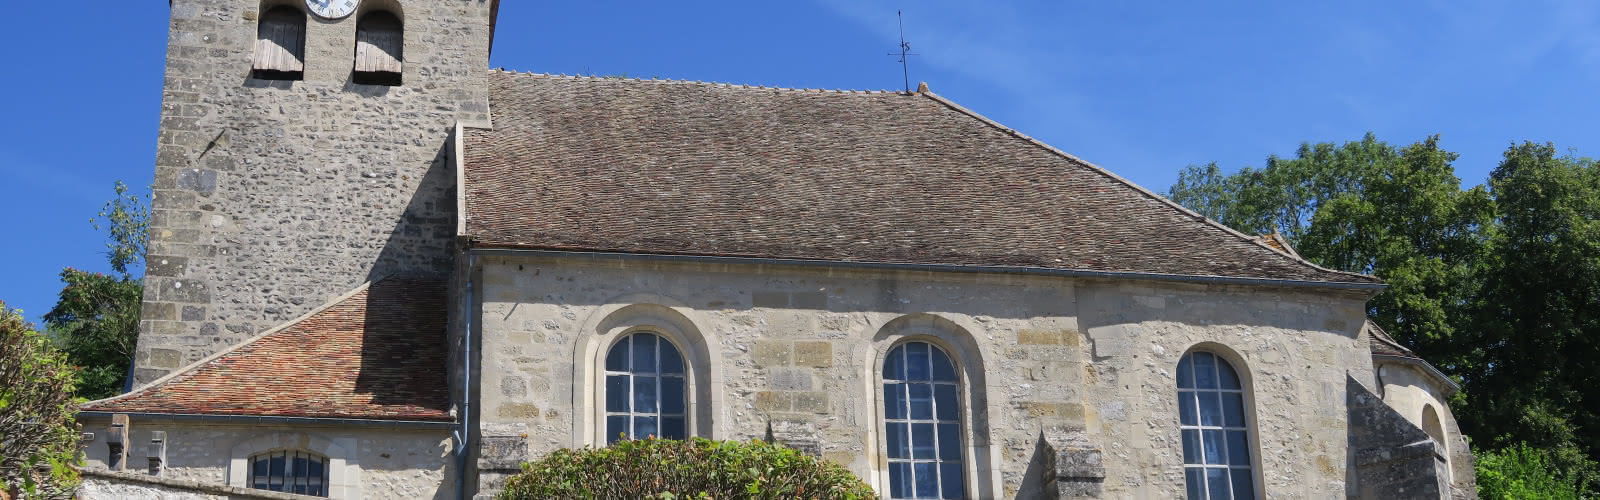 Eglise, Saint-Cyr-en-Arthies